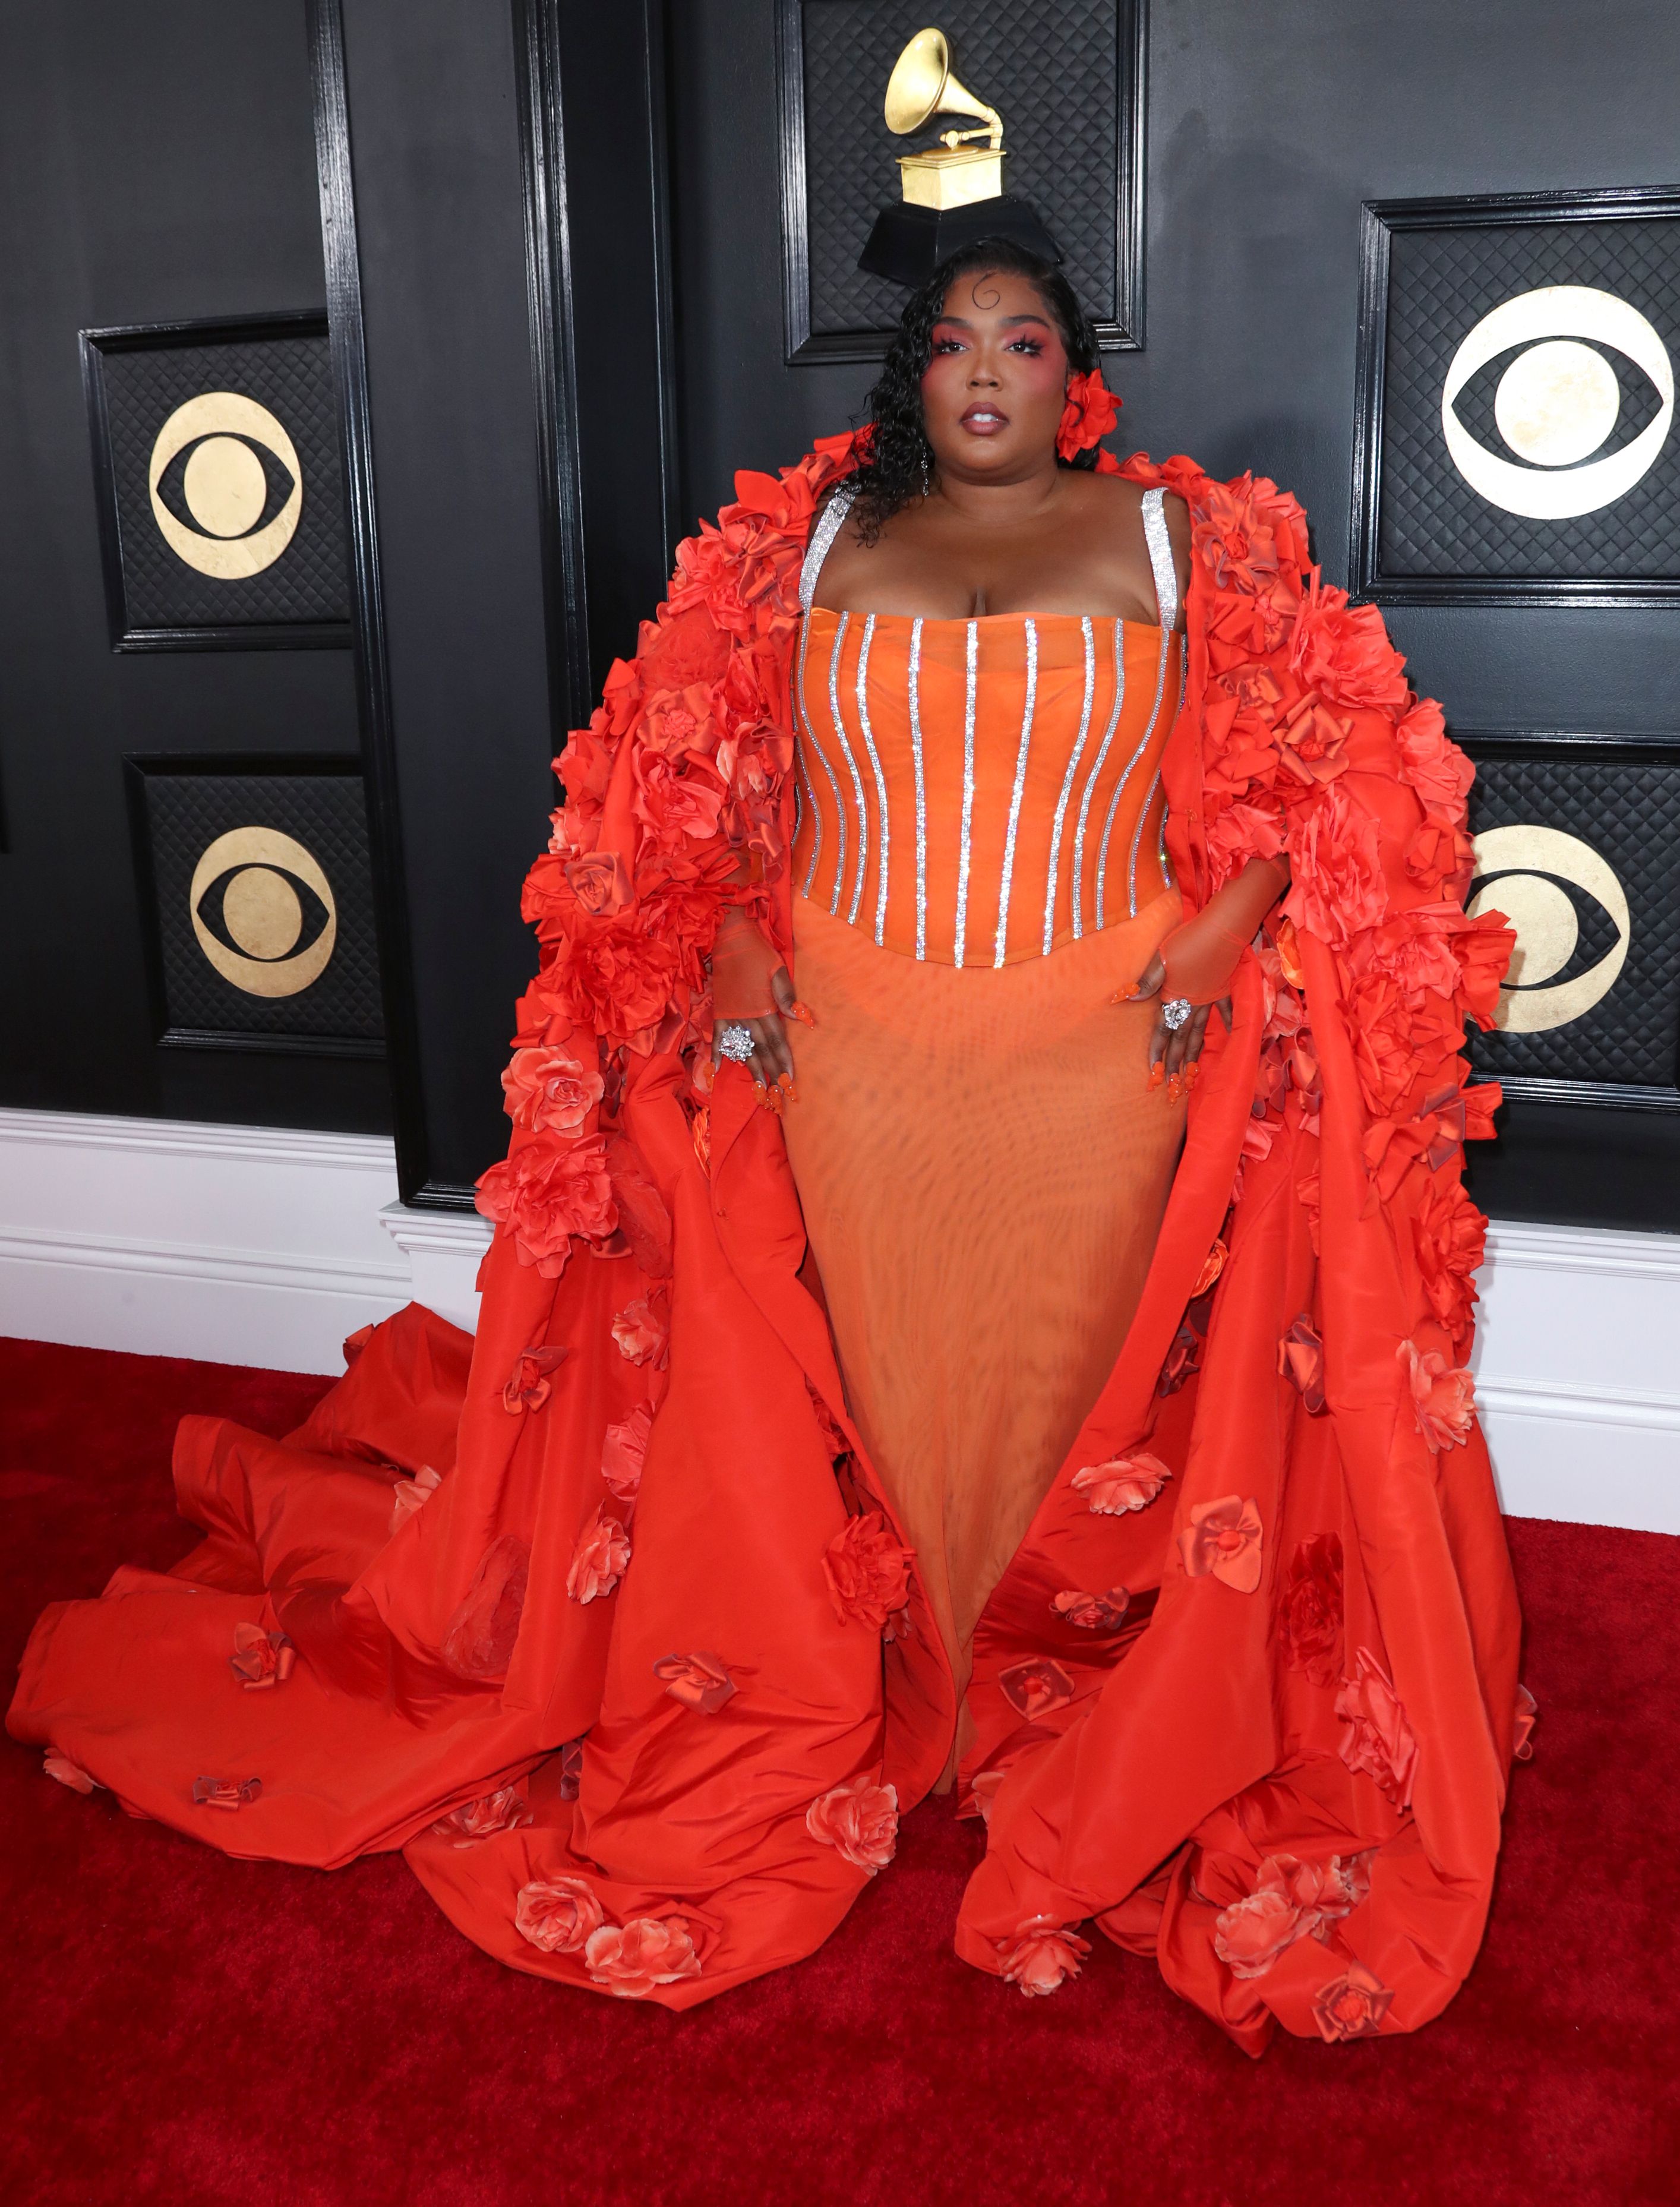 Lizzo Grammys 2023 Dress: Red Carpet Photos, Designer